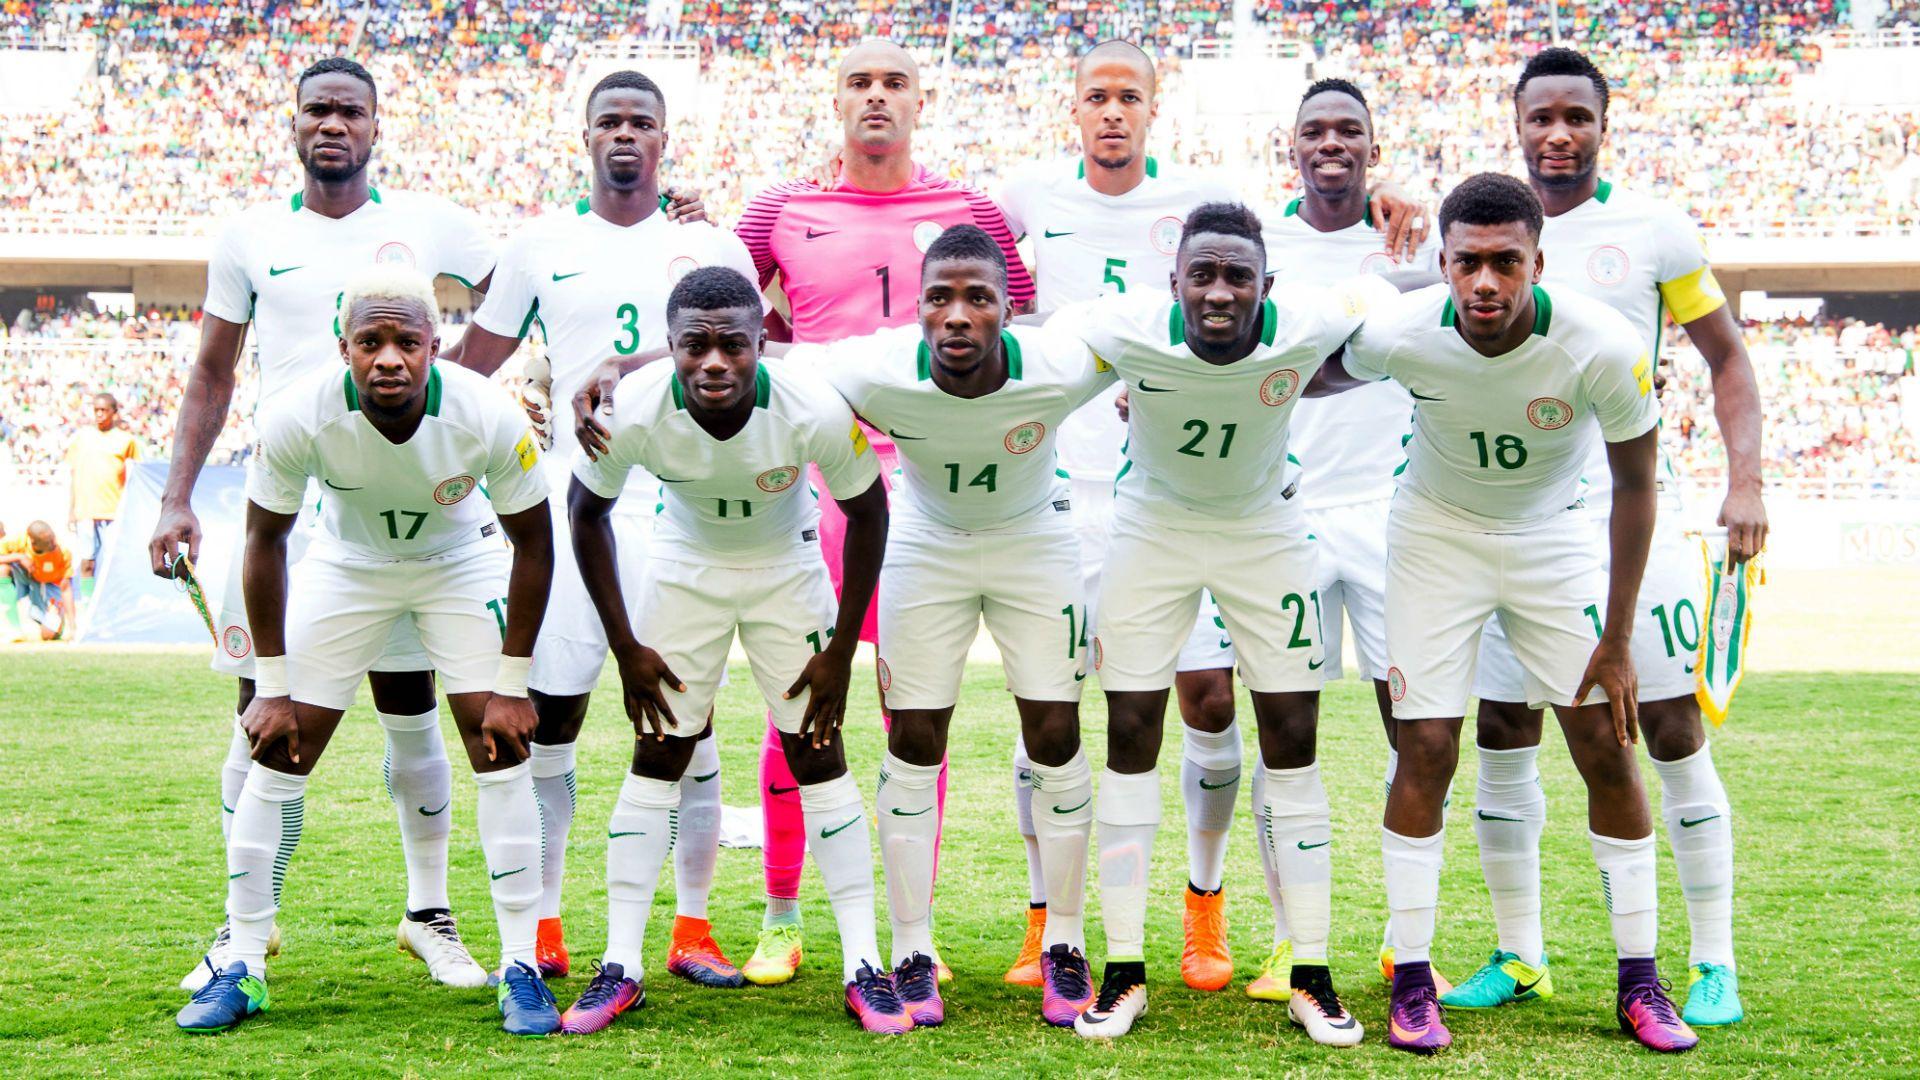 Nigeria National Football Team Wallpapers